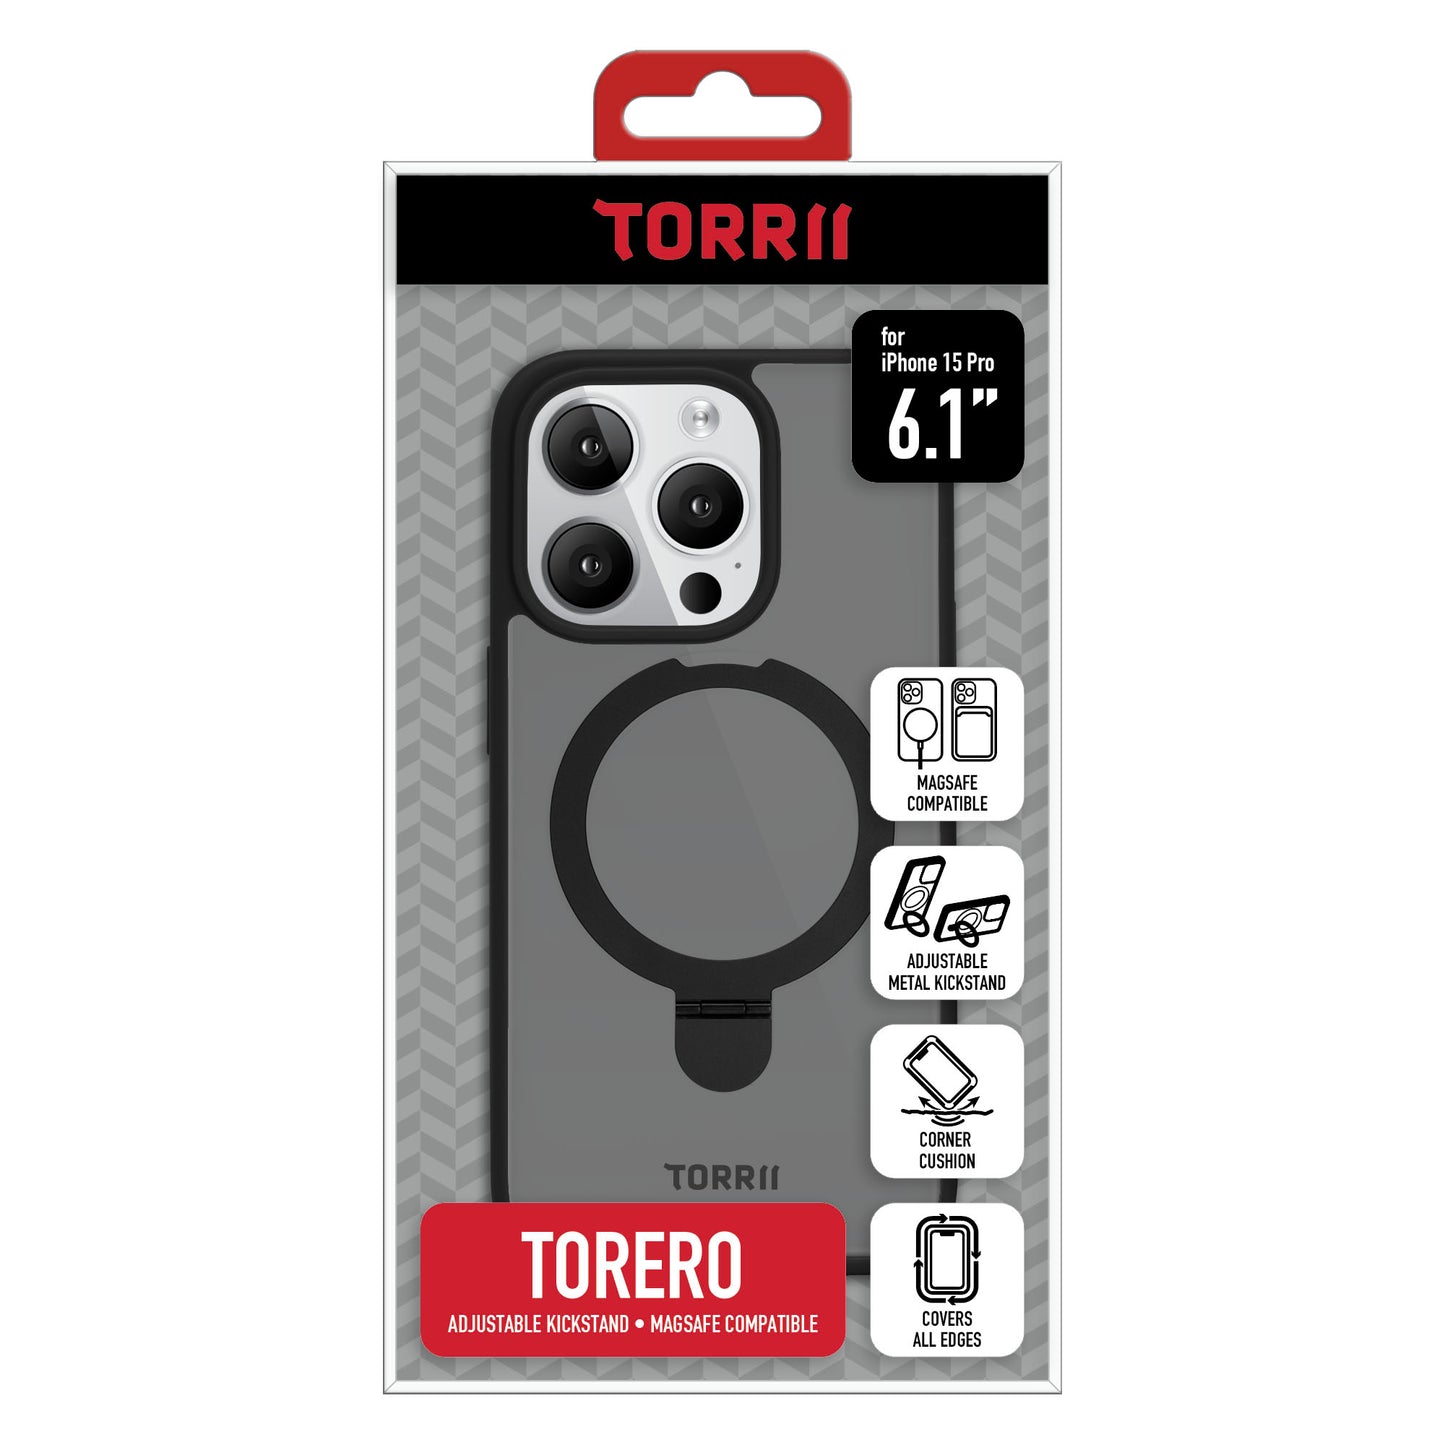 Torrii TORERO 手機殼 for iPhone 15 Pro (黑色)